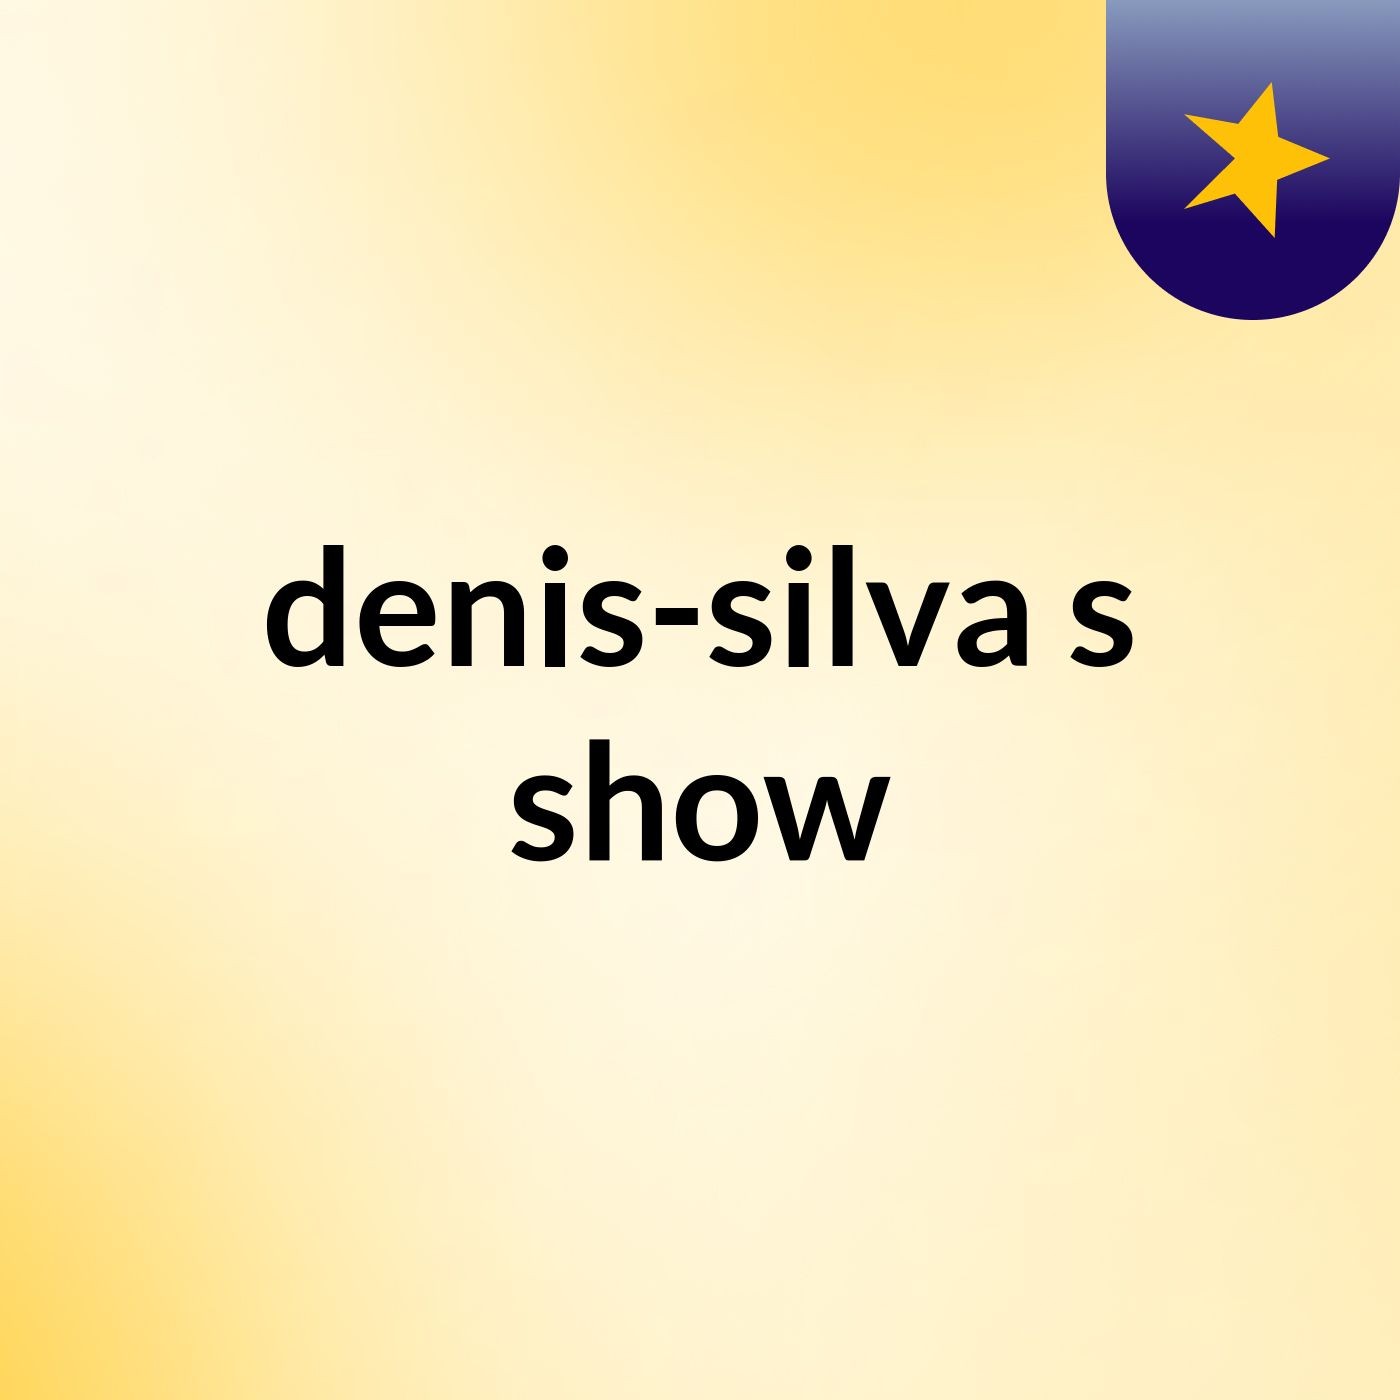 denis-silva's show